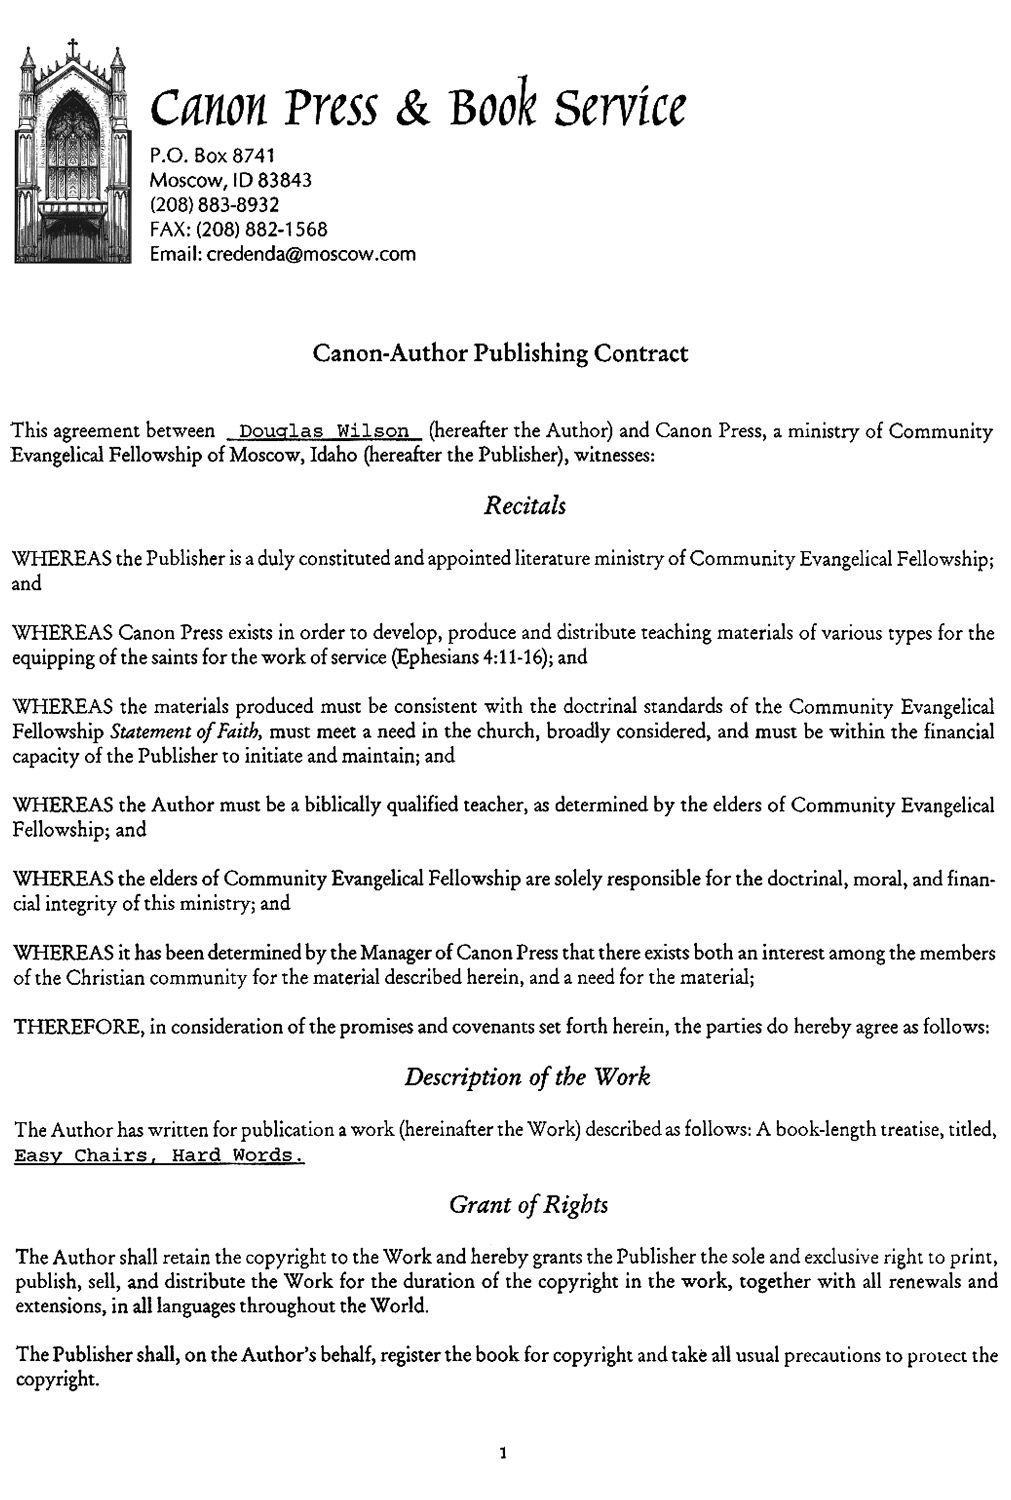 Canon Press Contract, page 1